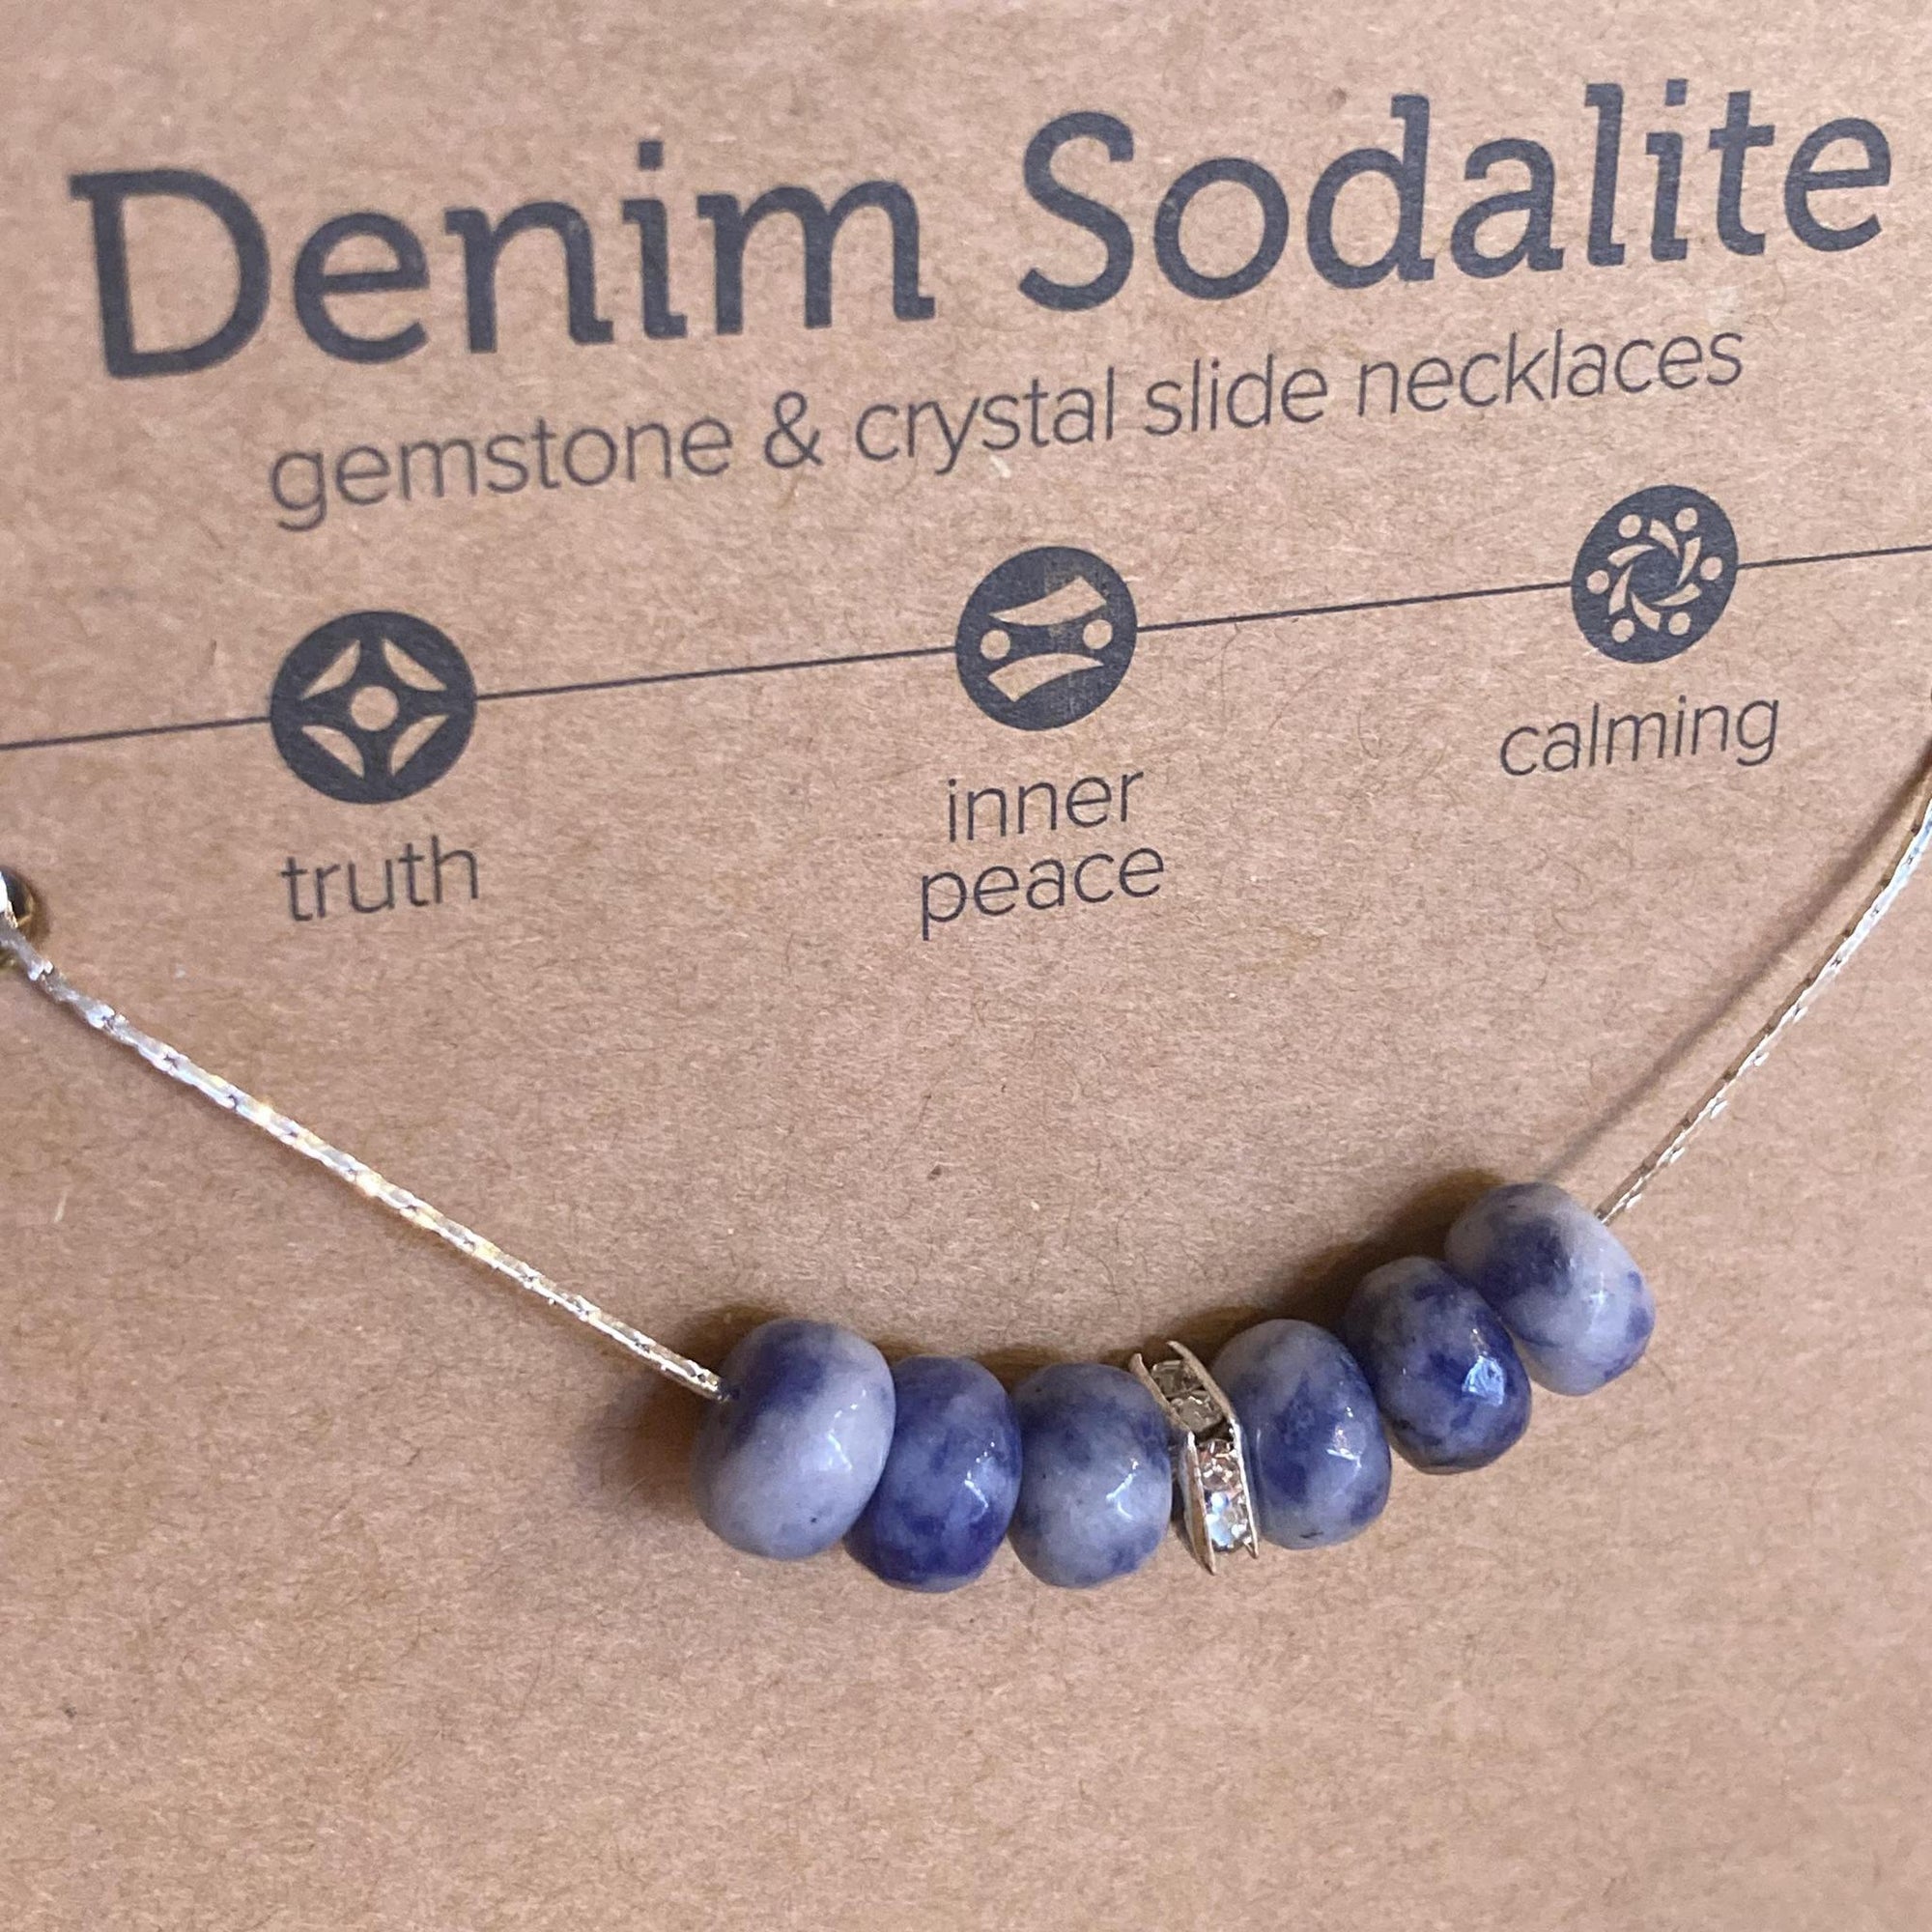 Gemstone Slide Necklace | Denim Sodalite